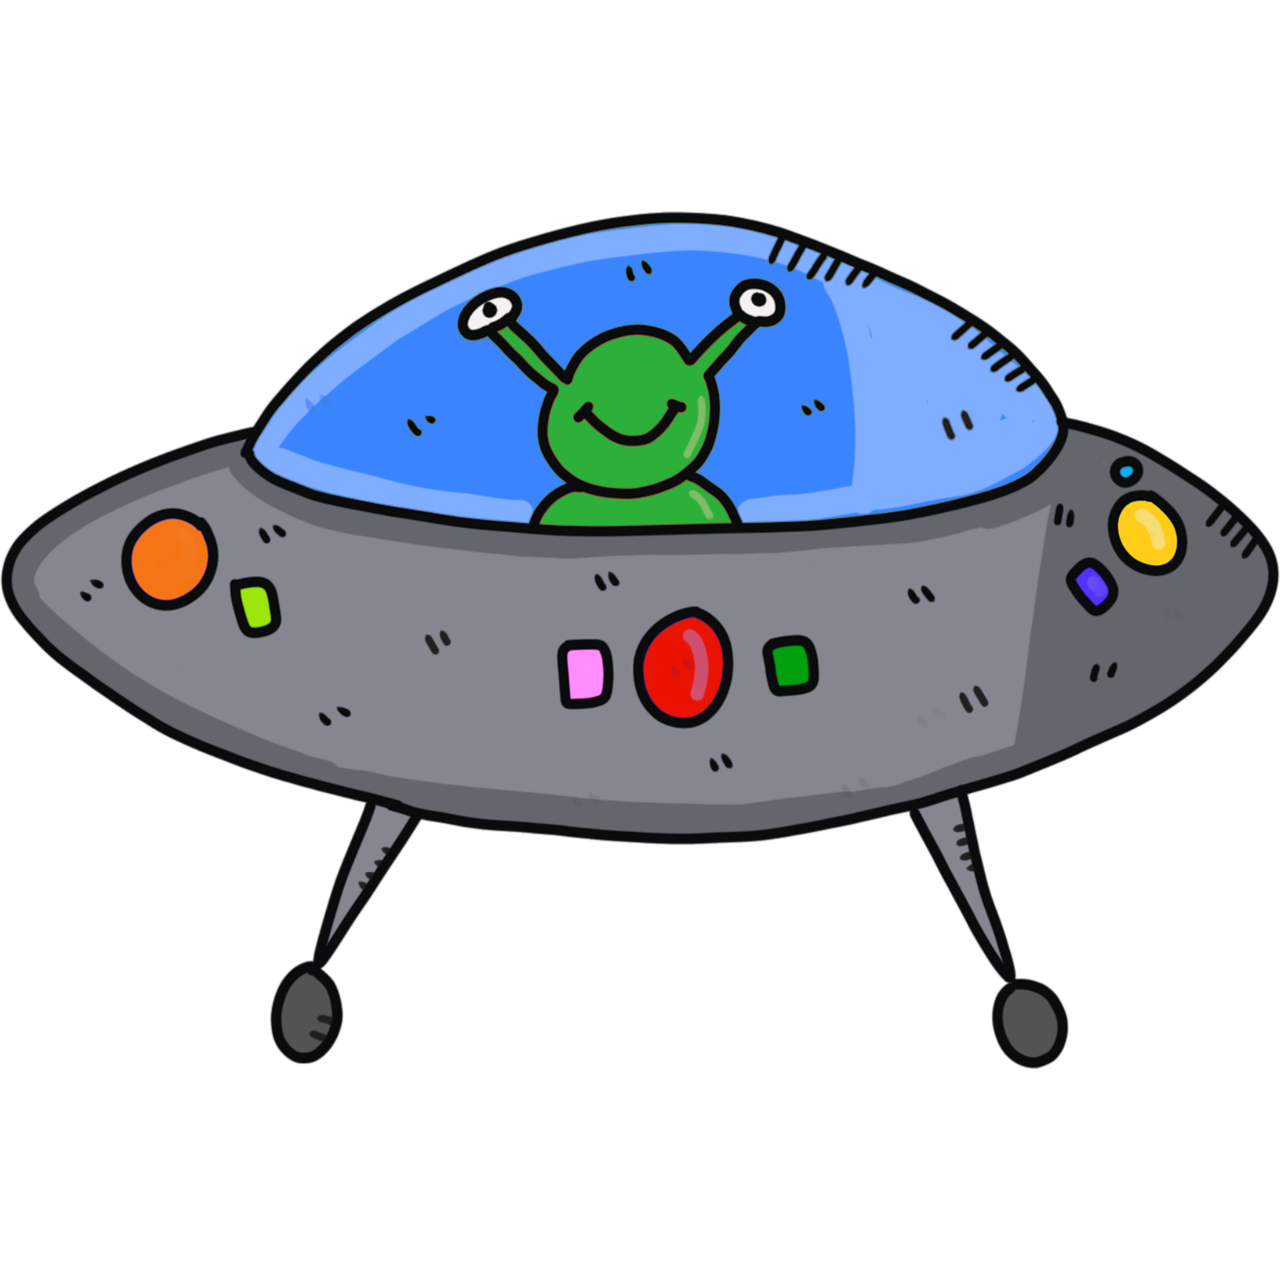 a cartoon alien in a flying saucer, dark ( spaceship ), vehicle illustration, full color illustration, clipart